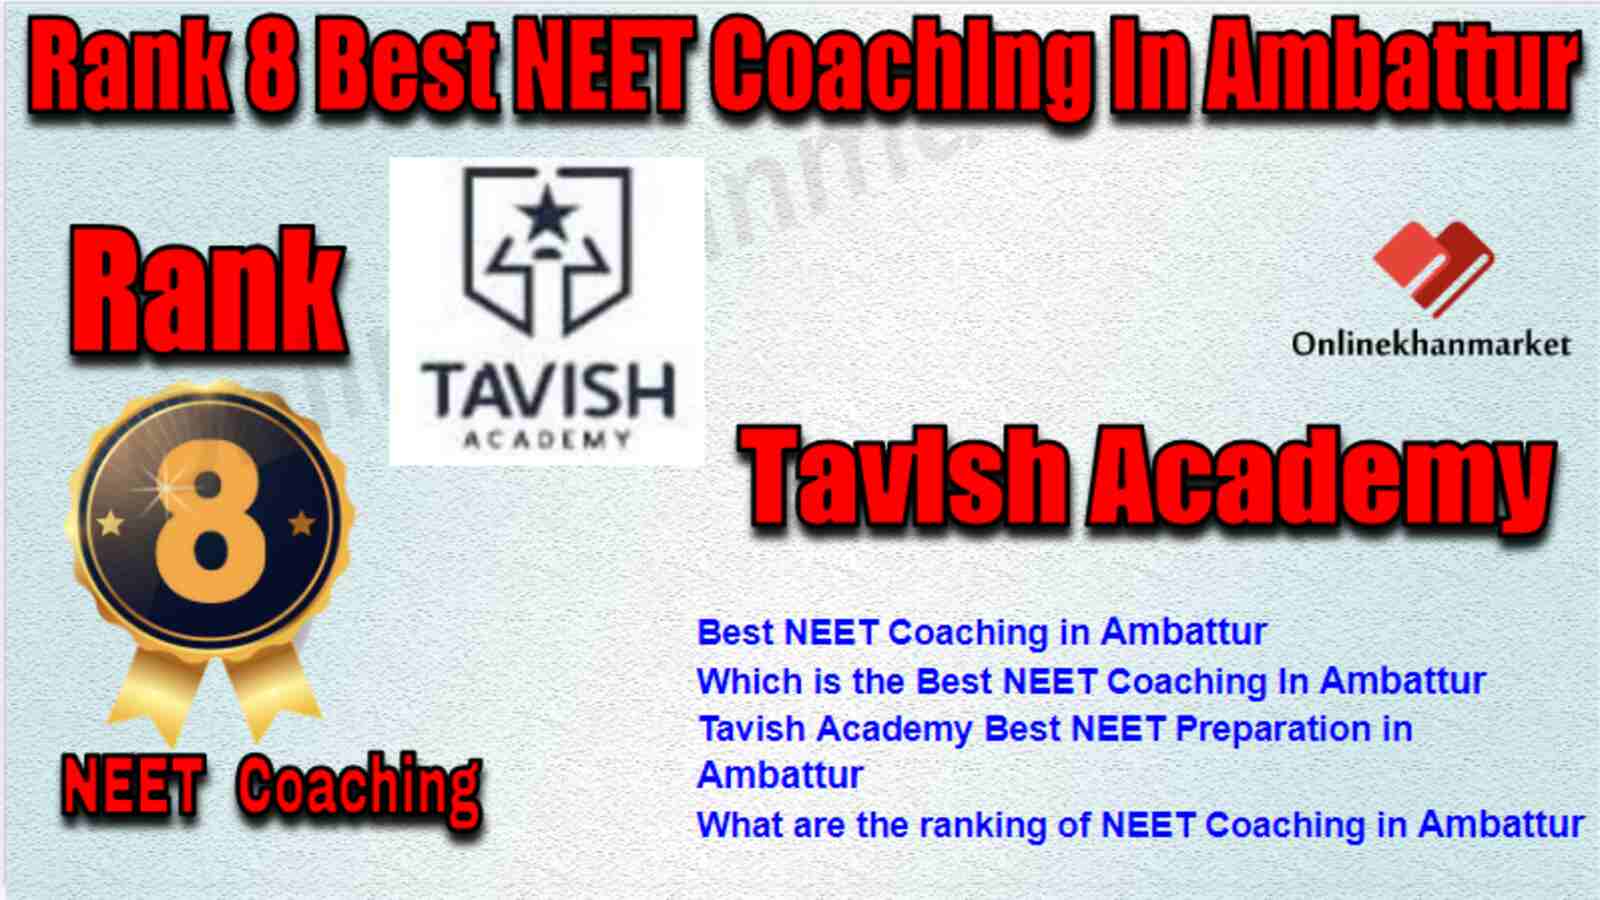 Rank 8 Best NEET Coaching in Ambattur